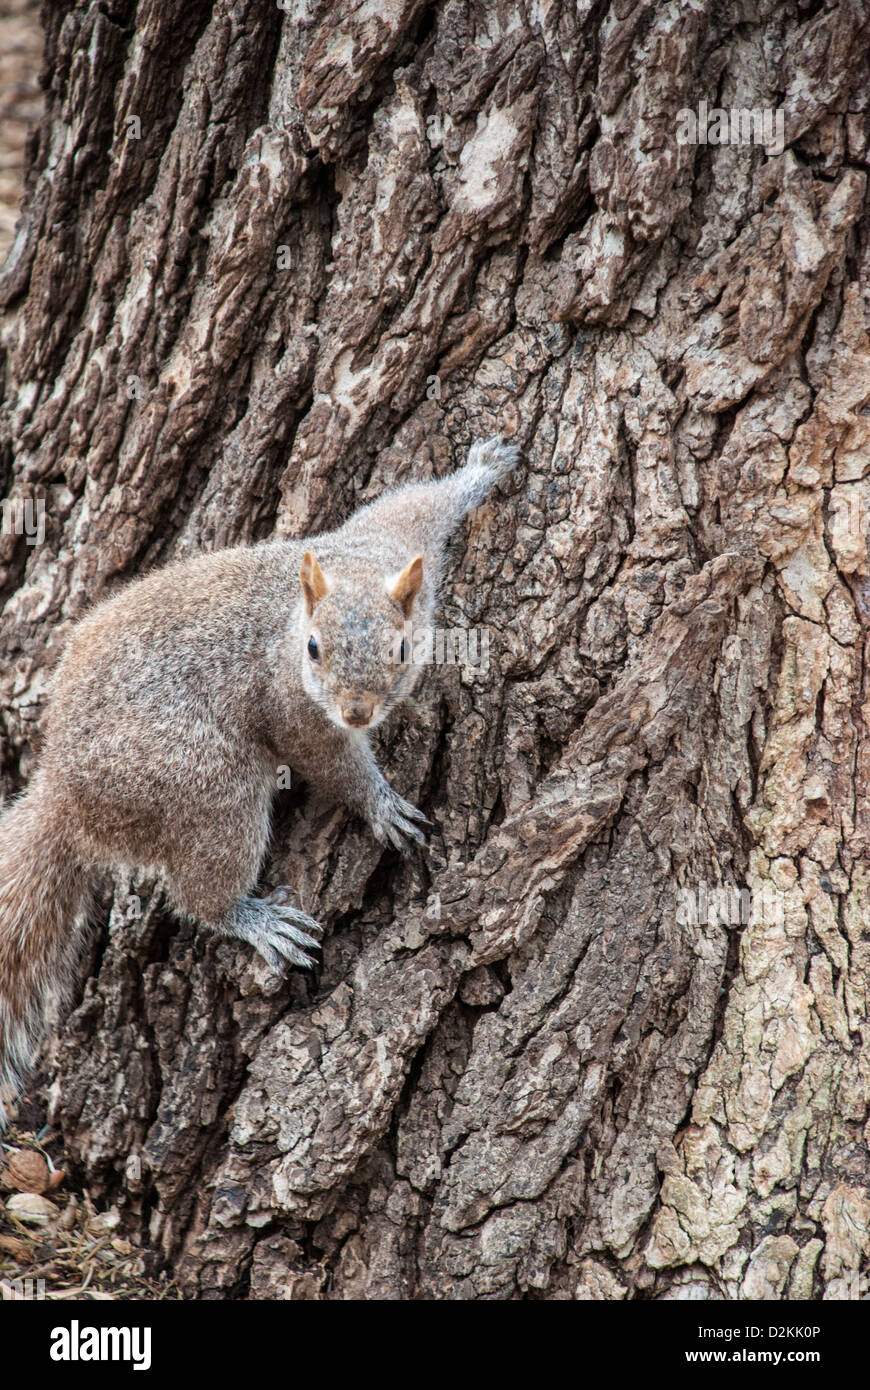 Eastern Gray Squirrel, Sciurus carolinensis, clinging to the bark of a tree in Washington Square Park, Greenwich Village, New York City, NY, USA Stock Photo